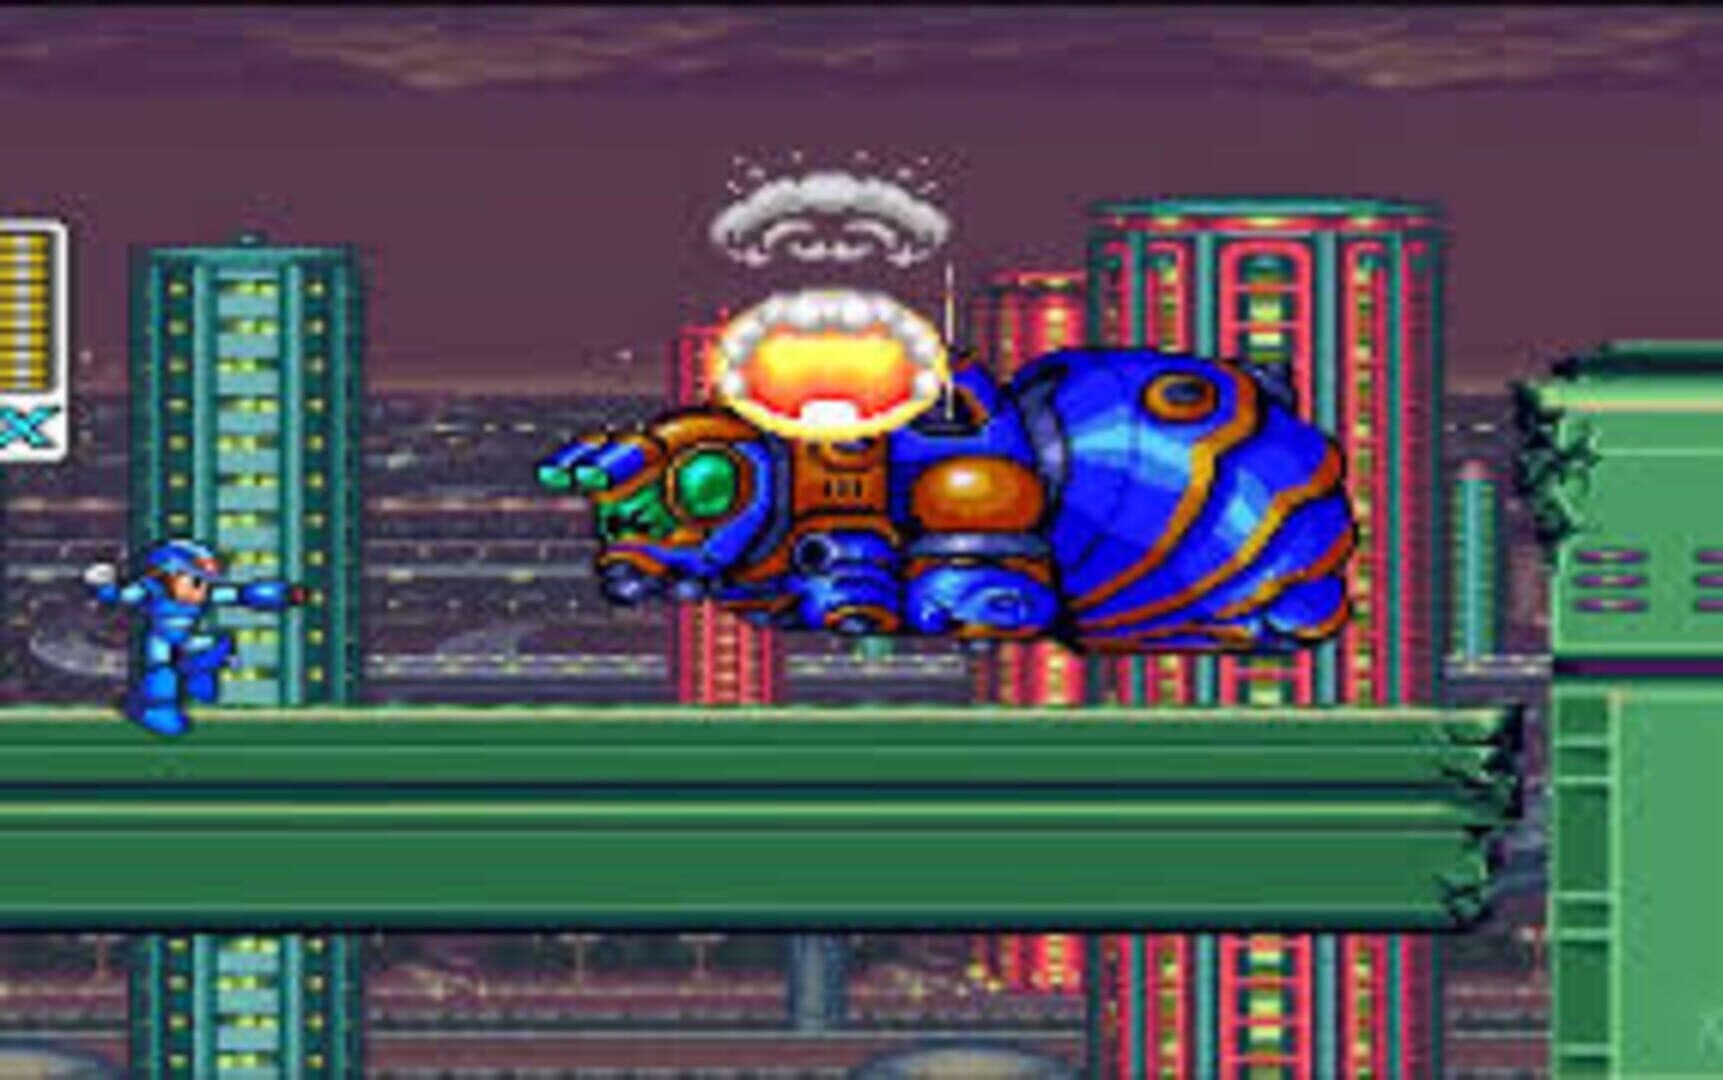 Mega Man X Collection Image